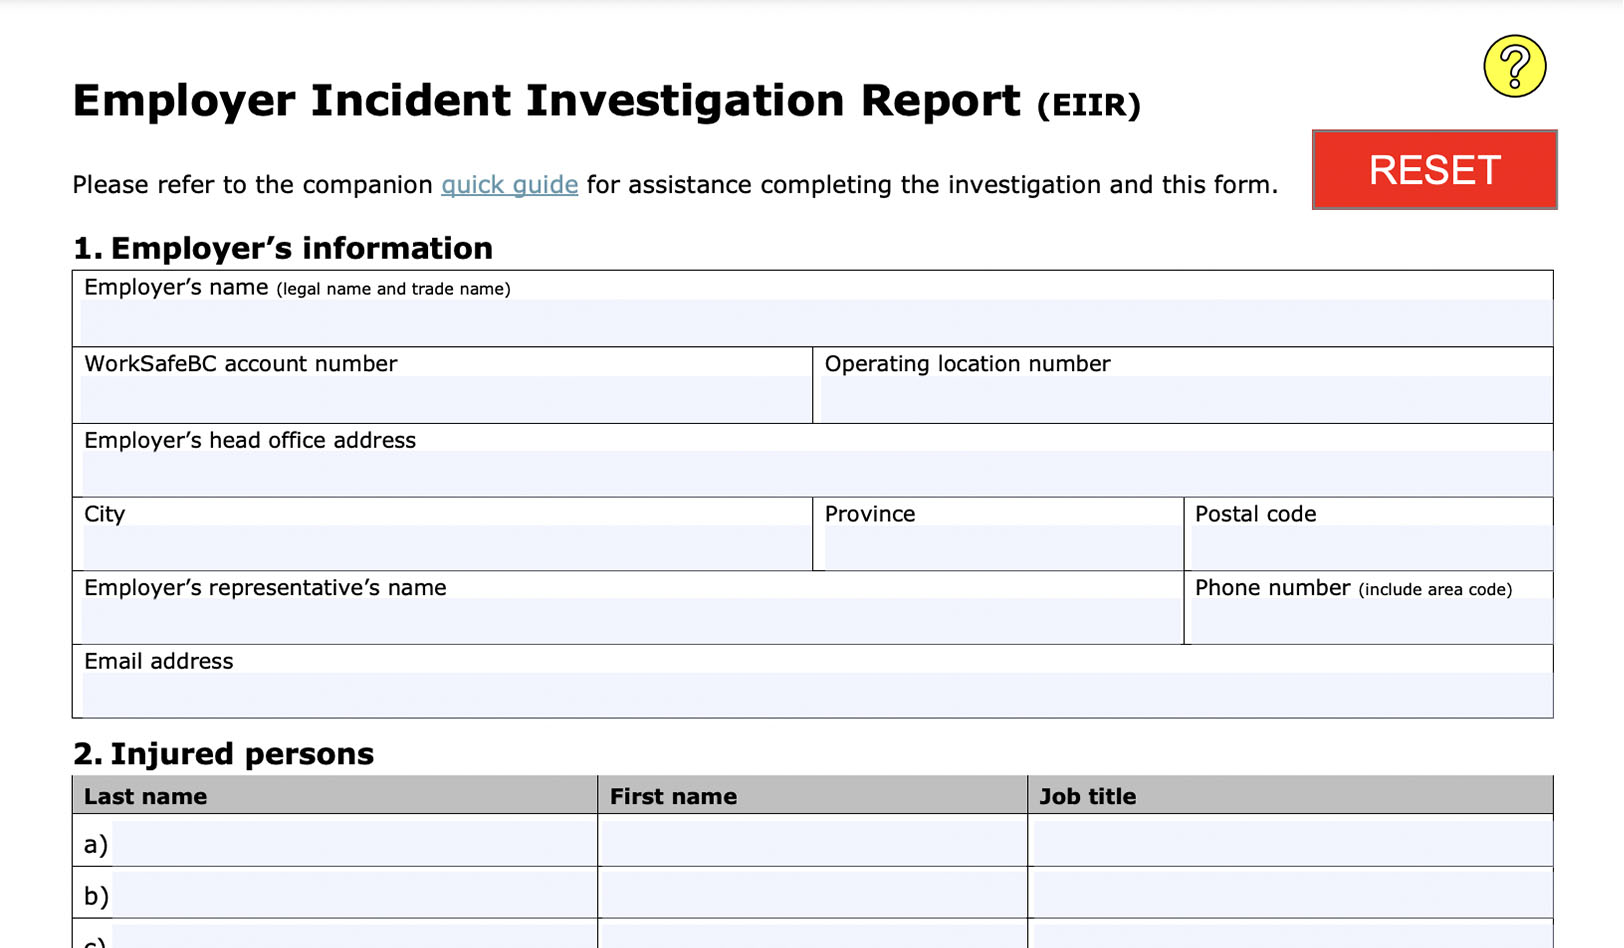 Employer Incident Investigation Report 52E40 EIIR